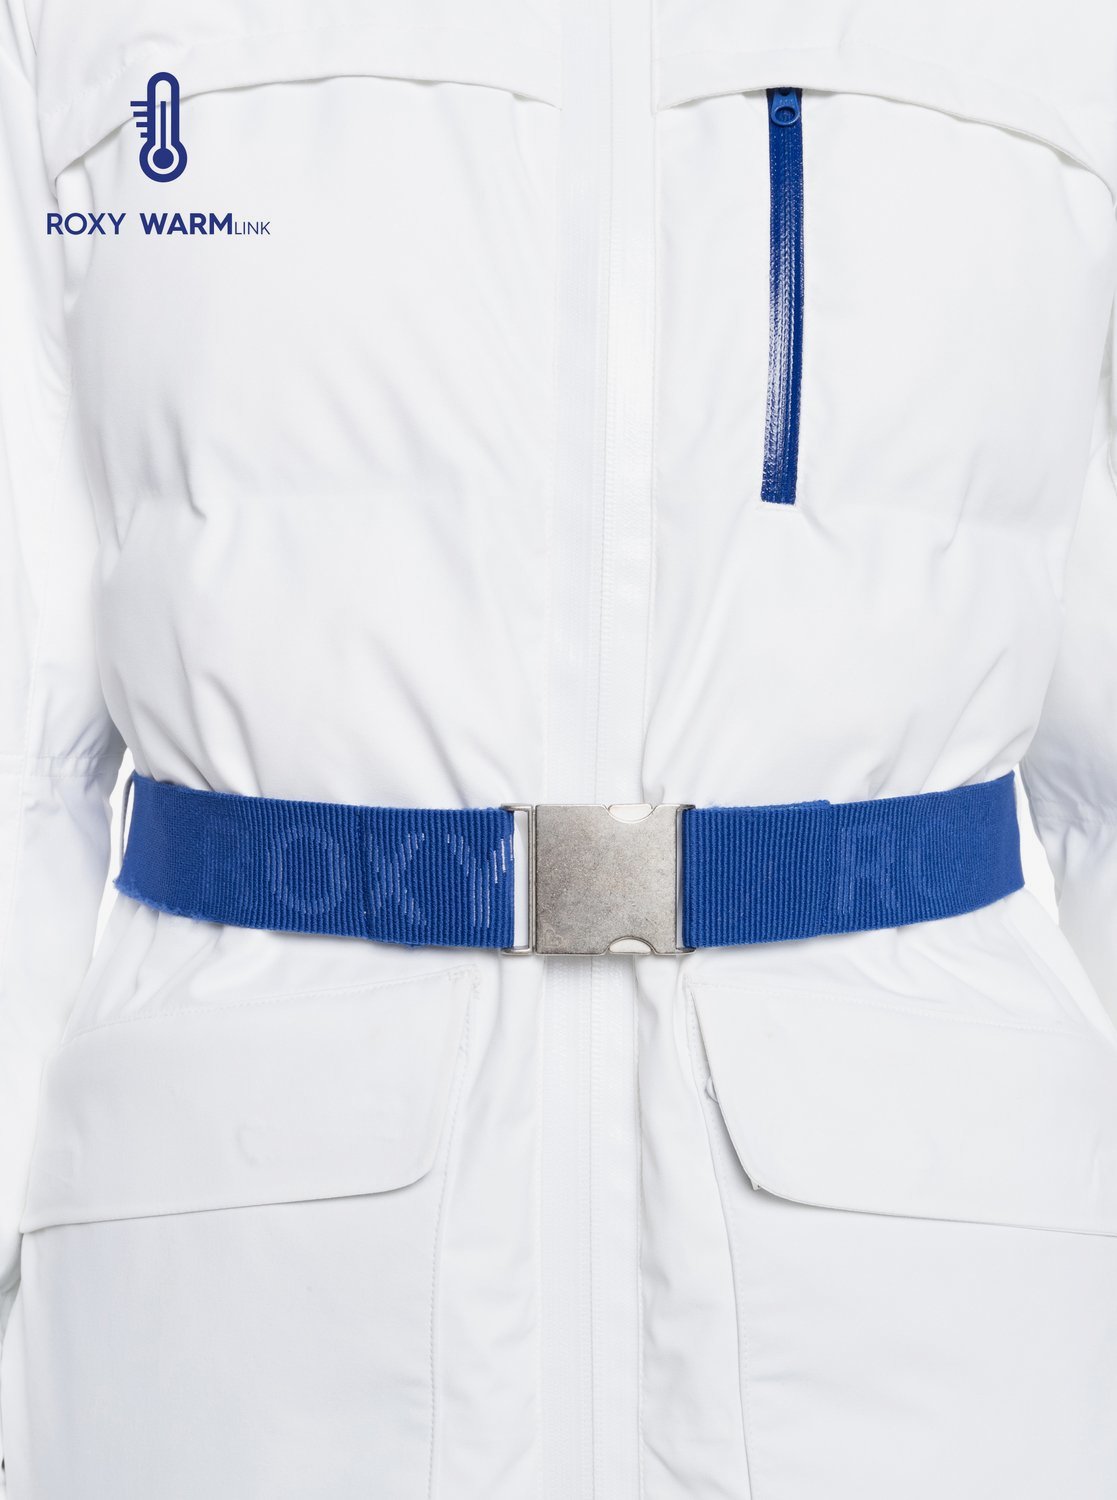 Roxy Women's Premiere Snow Jacket White Waist Front Close Up View